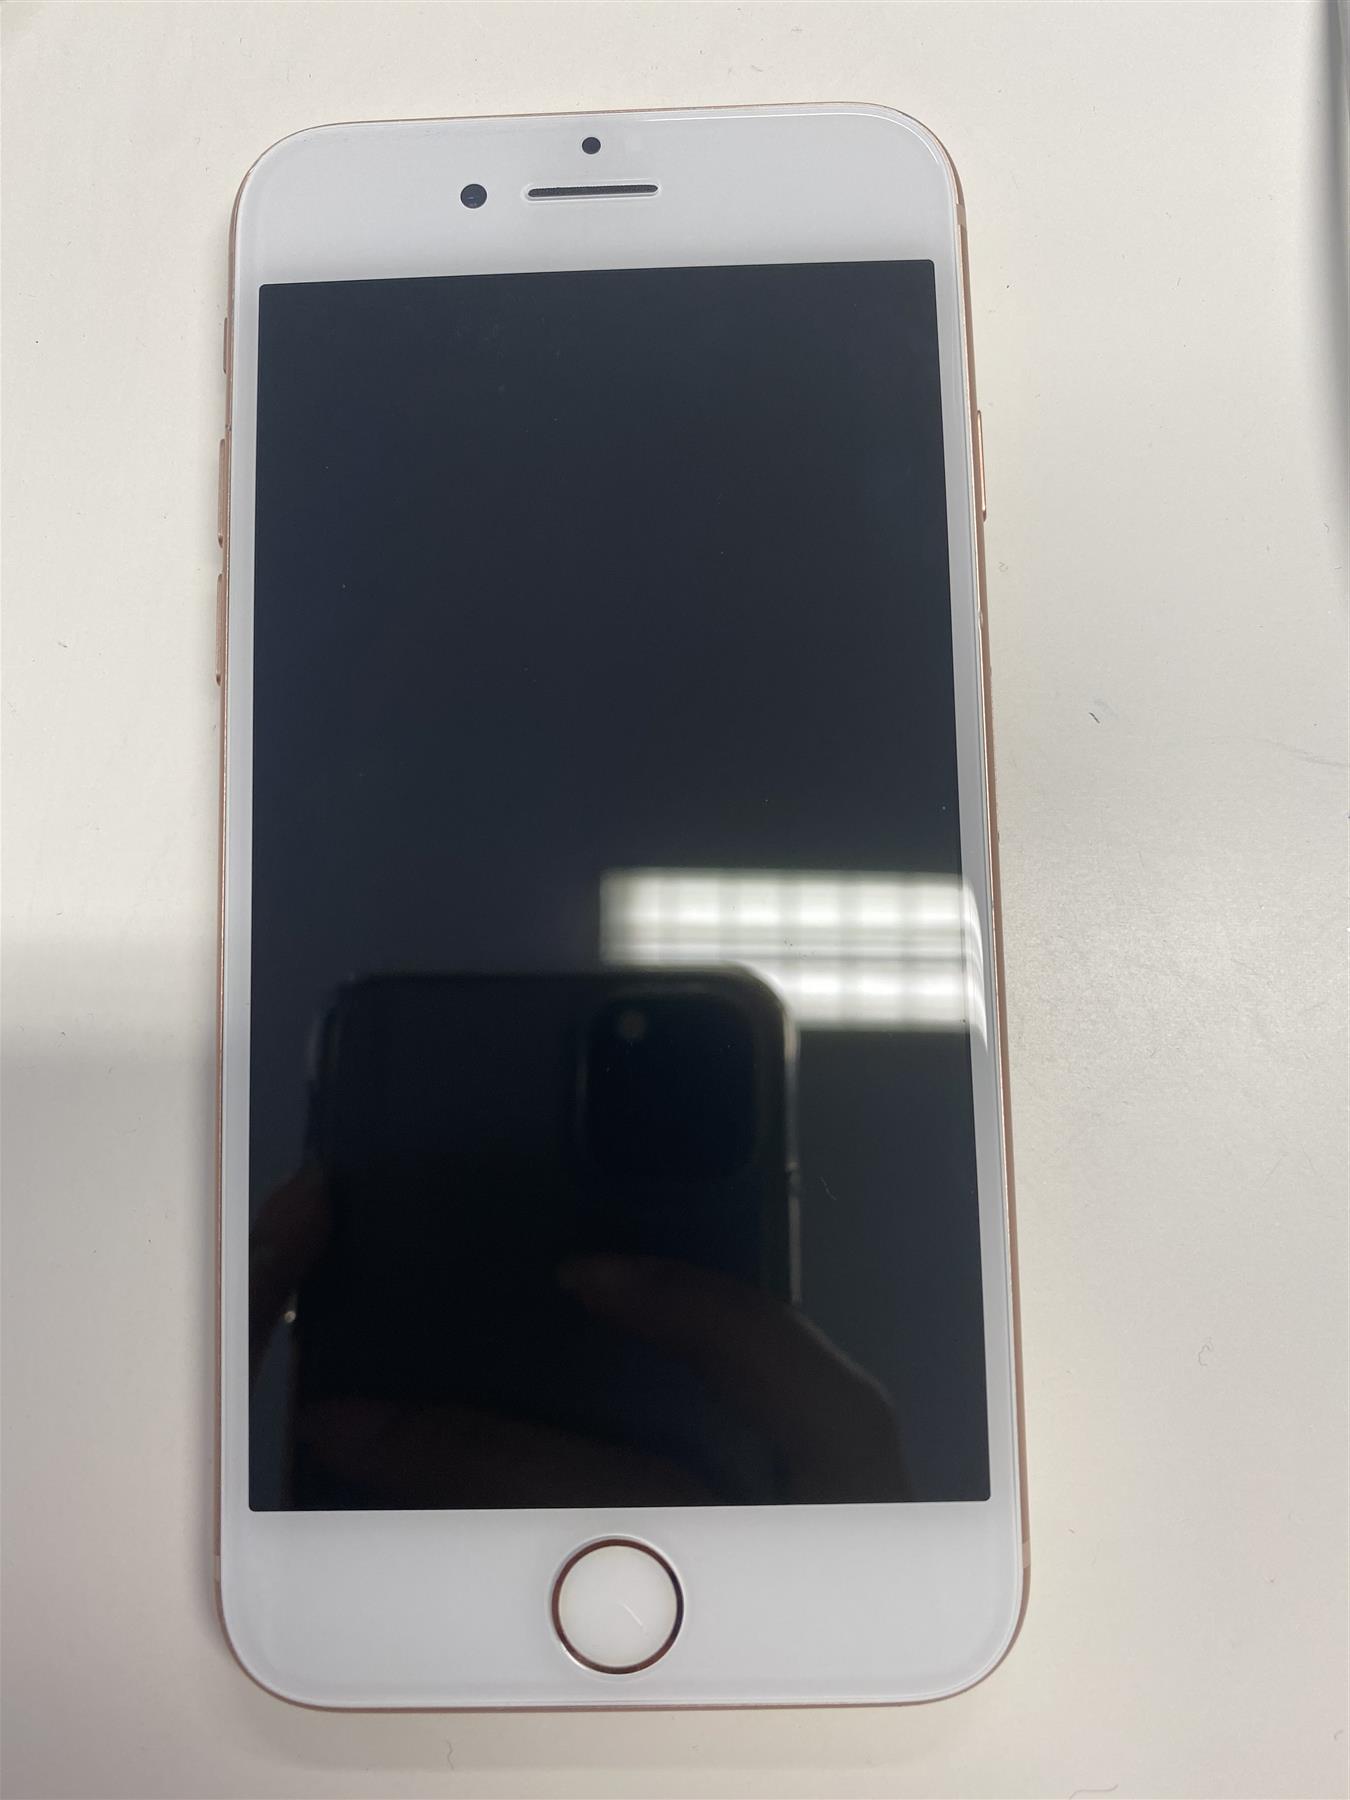 Apple iPhone 8 256GB Gold Unlocked - Used